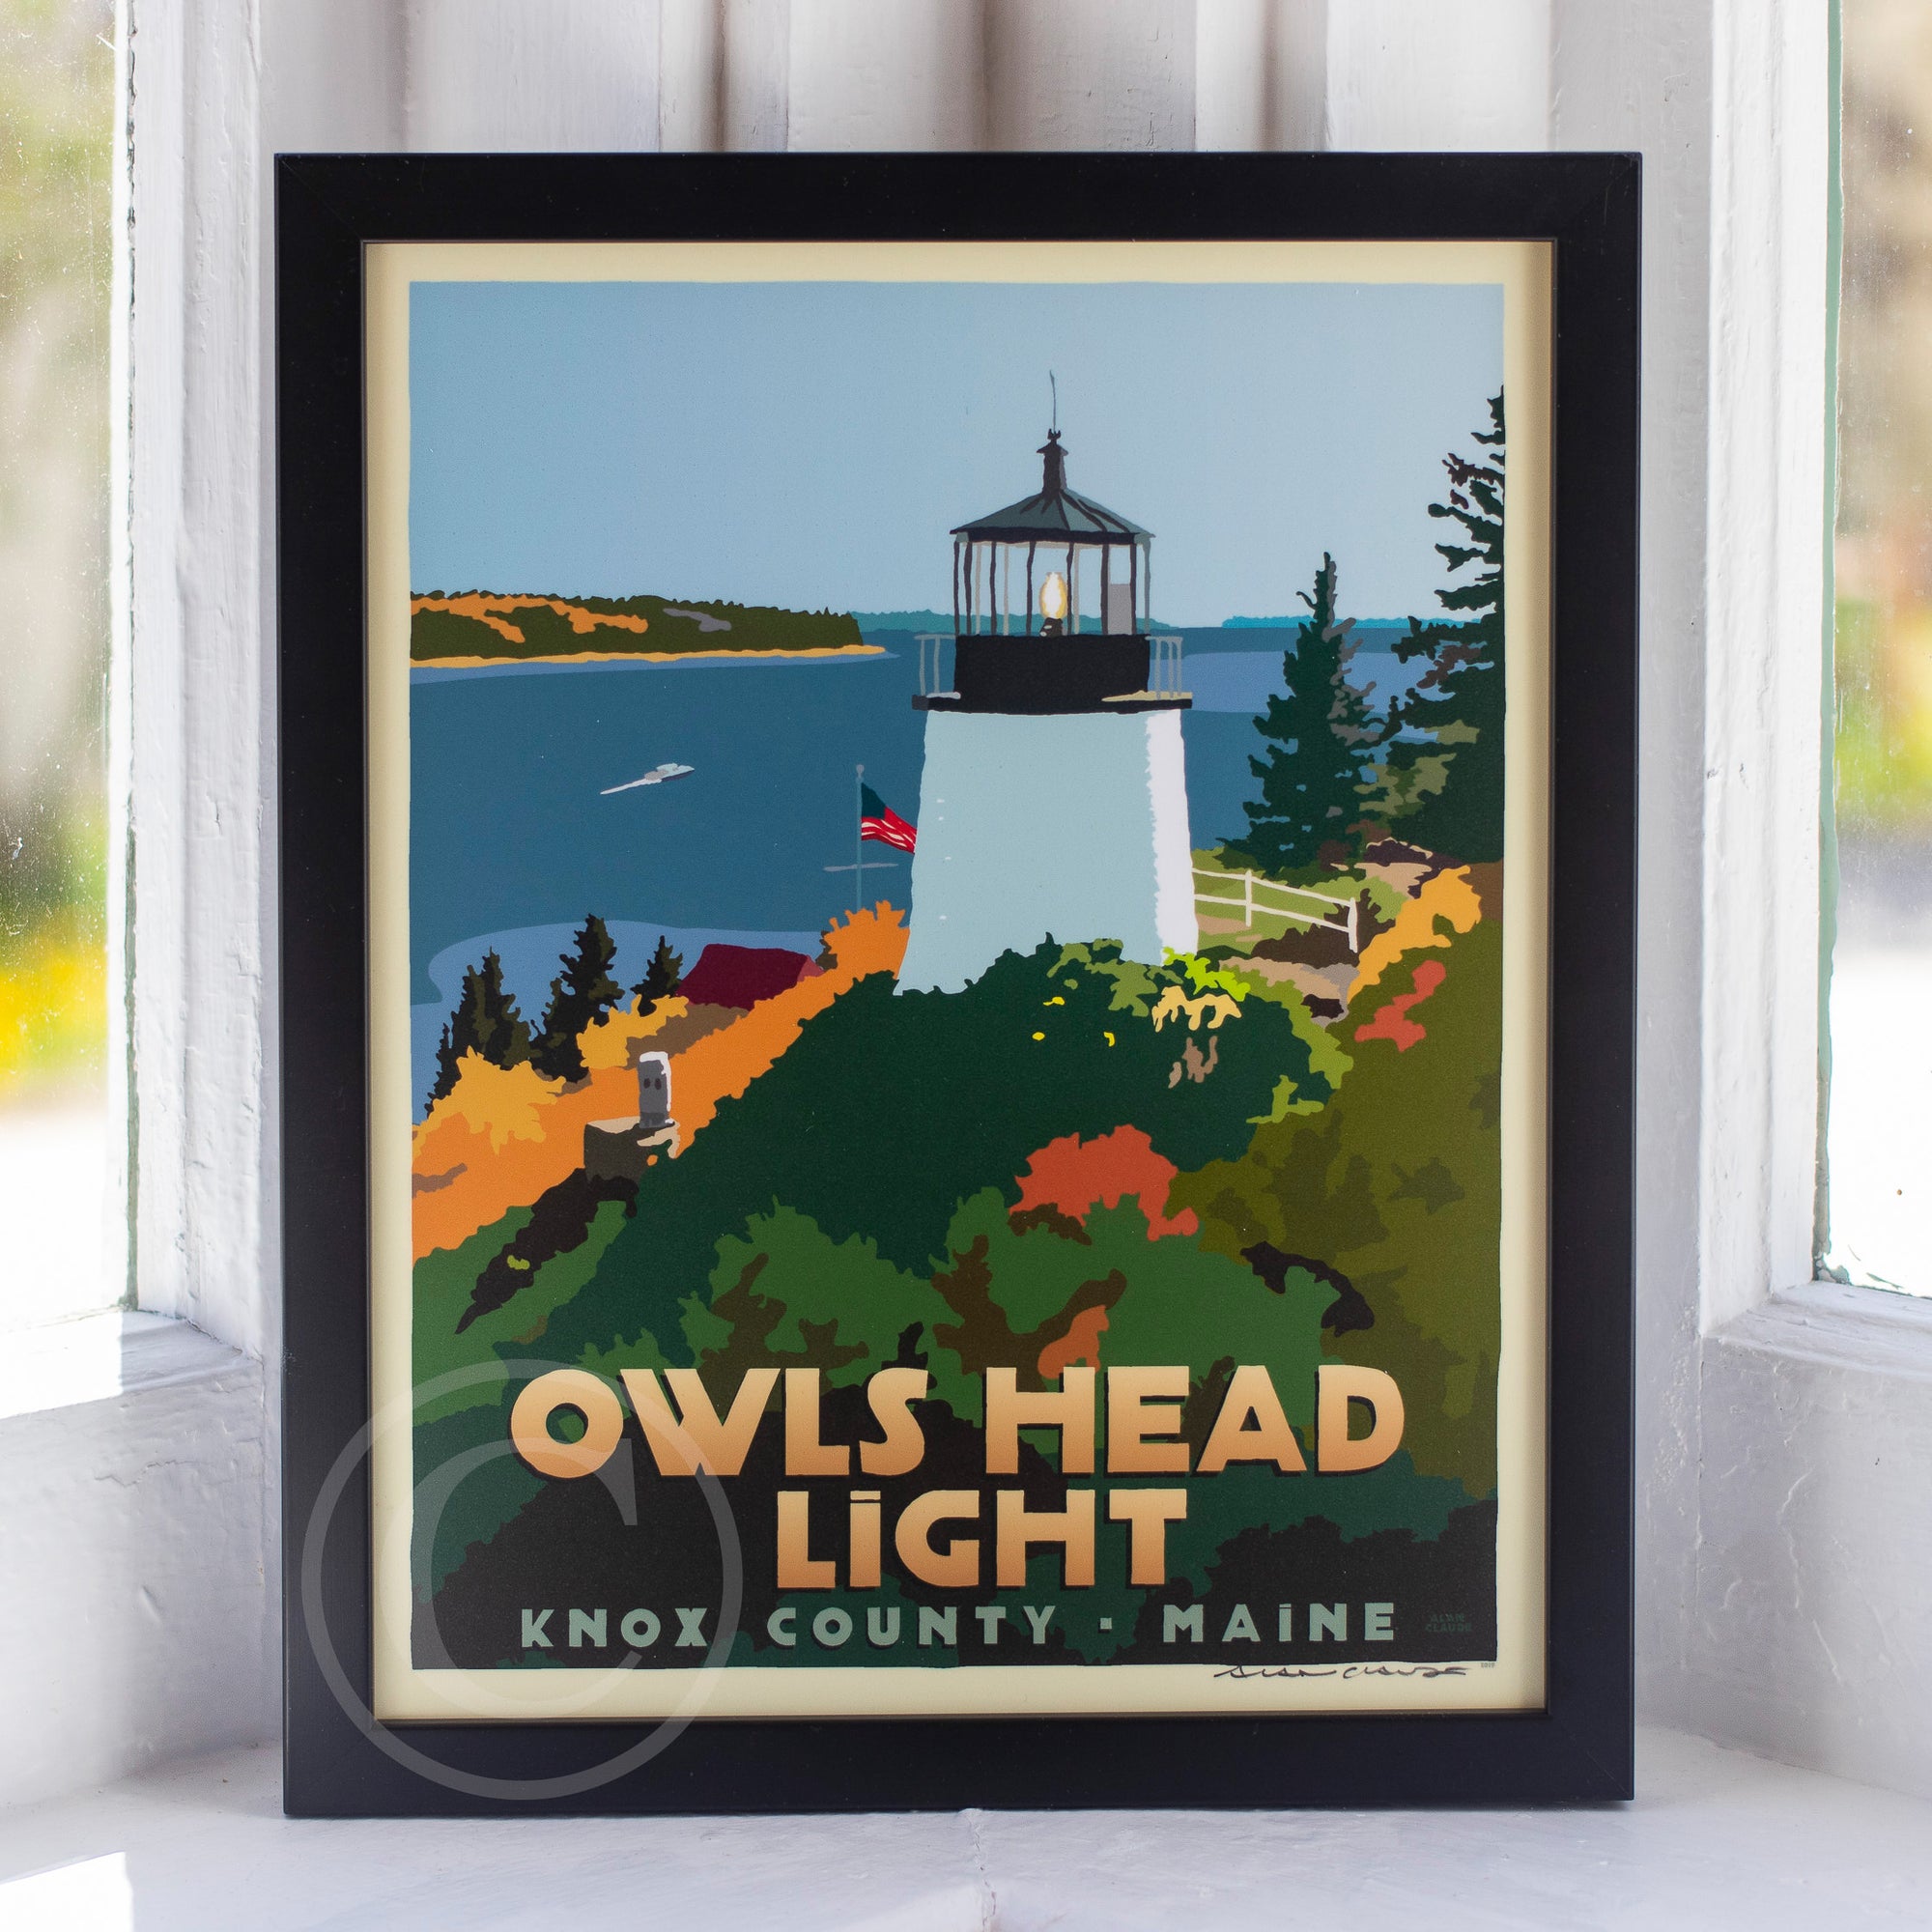 Above Owls Head Light Art Print 8" x 10" Framed Travel Poster By Alan Claude - Maine